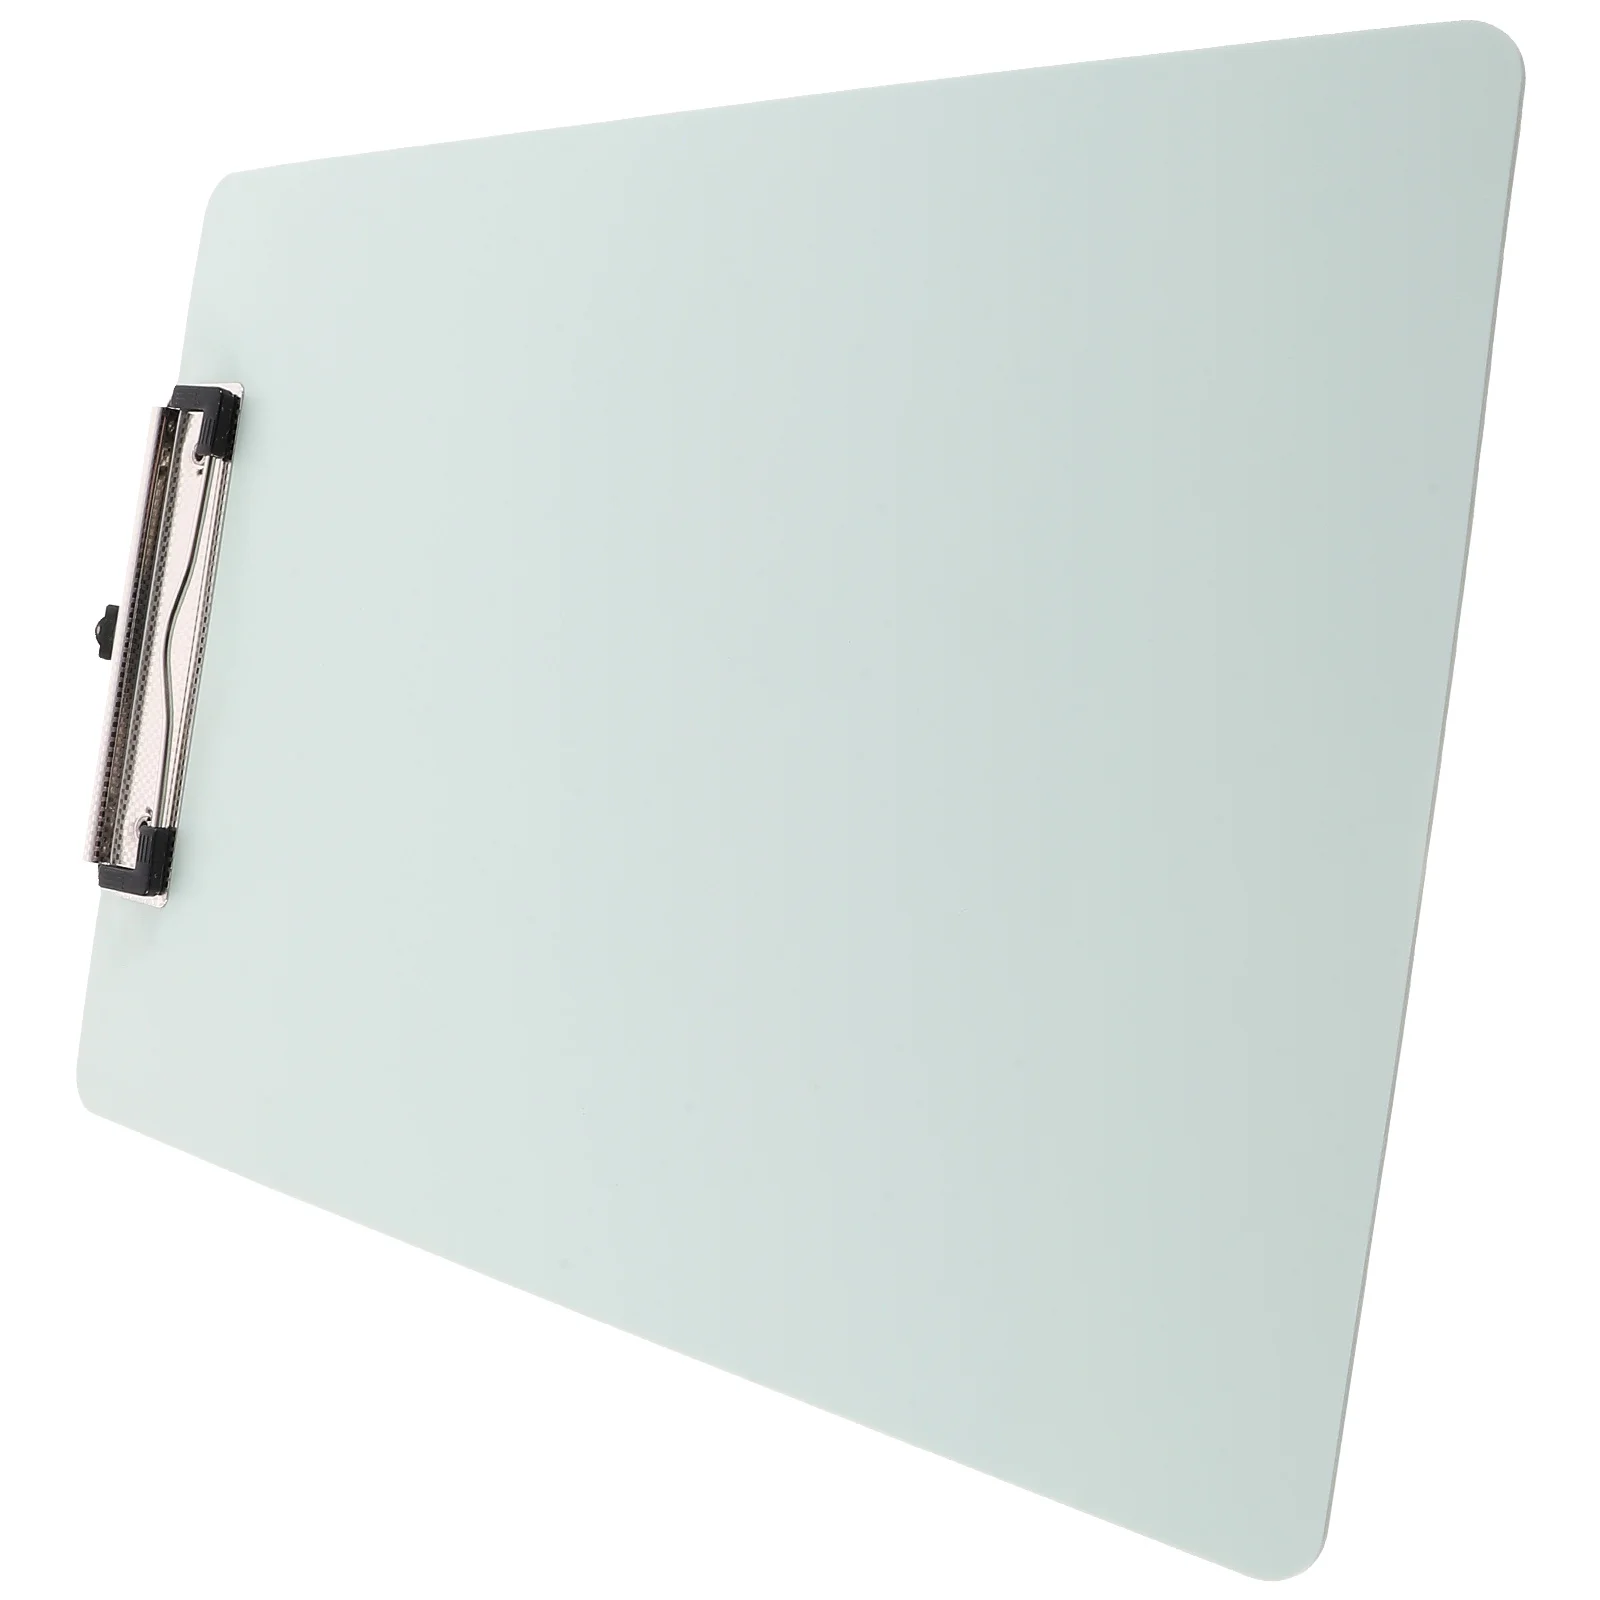 

Plastic Clipboard A4 Clip Boards Low Magnetic Profile Clipboard Cute Writing Hardboard Document File Folder